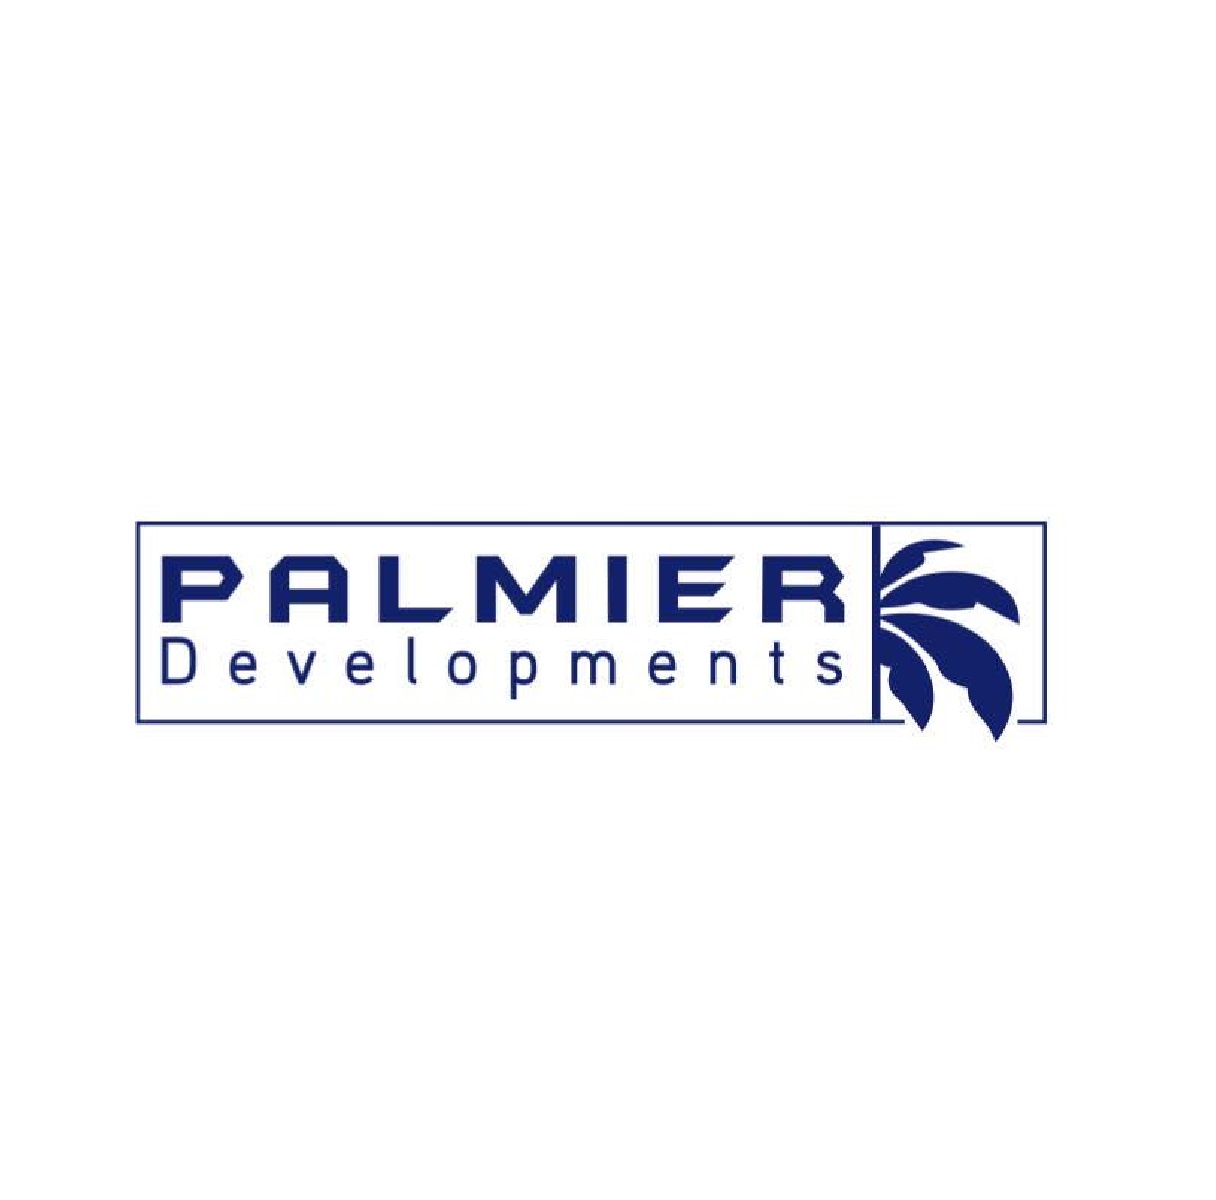 Palmier group